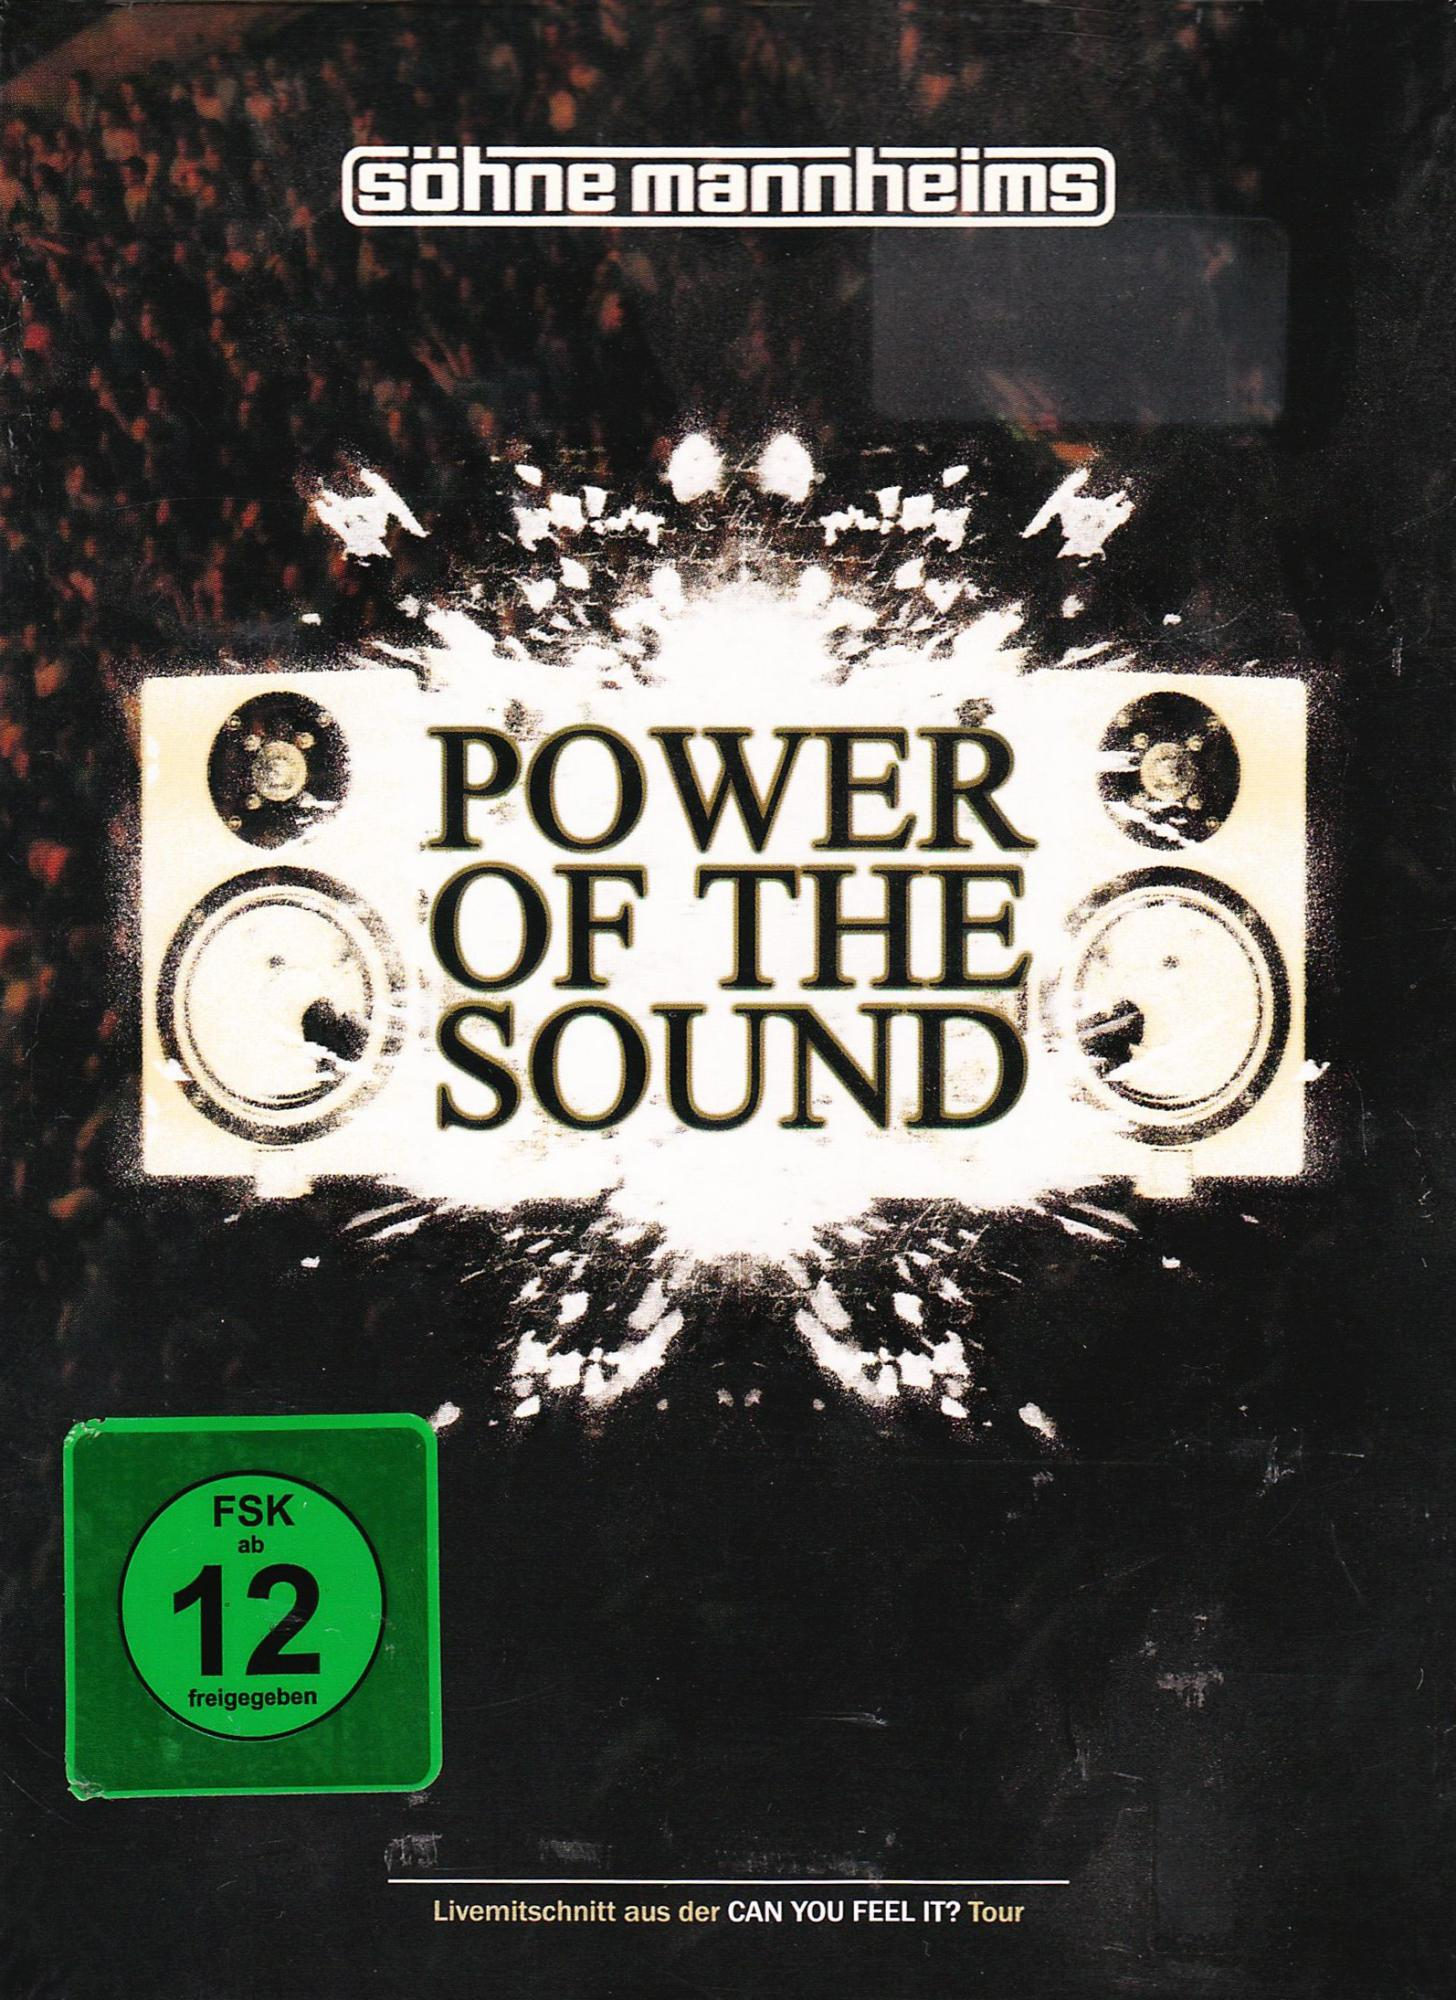 (DVD) Power Mannheims - Söhne The Mannheims Söhne Of Sound - -